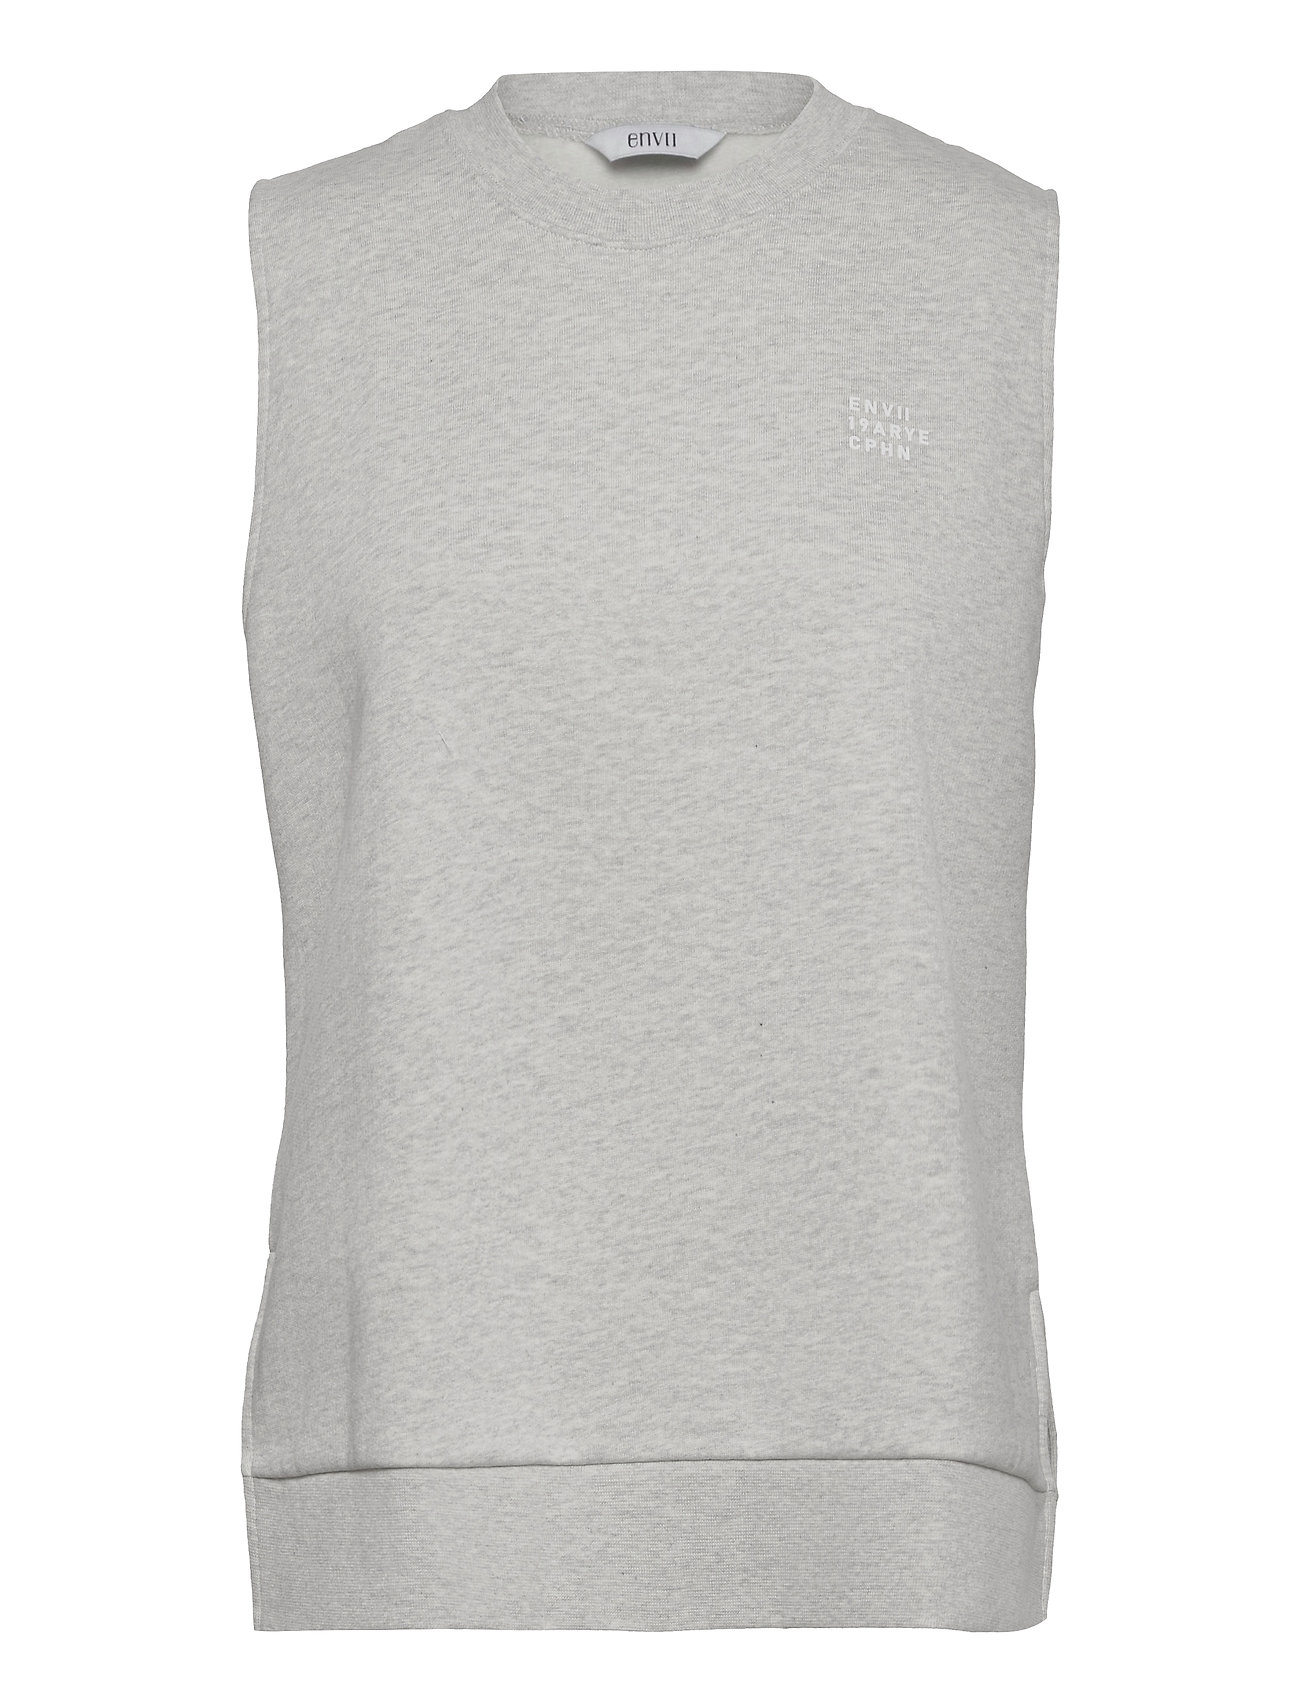 Enmonroe Vest Logo 5346 Tops T-shirts & Tops Sleeveless Grey Envii